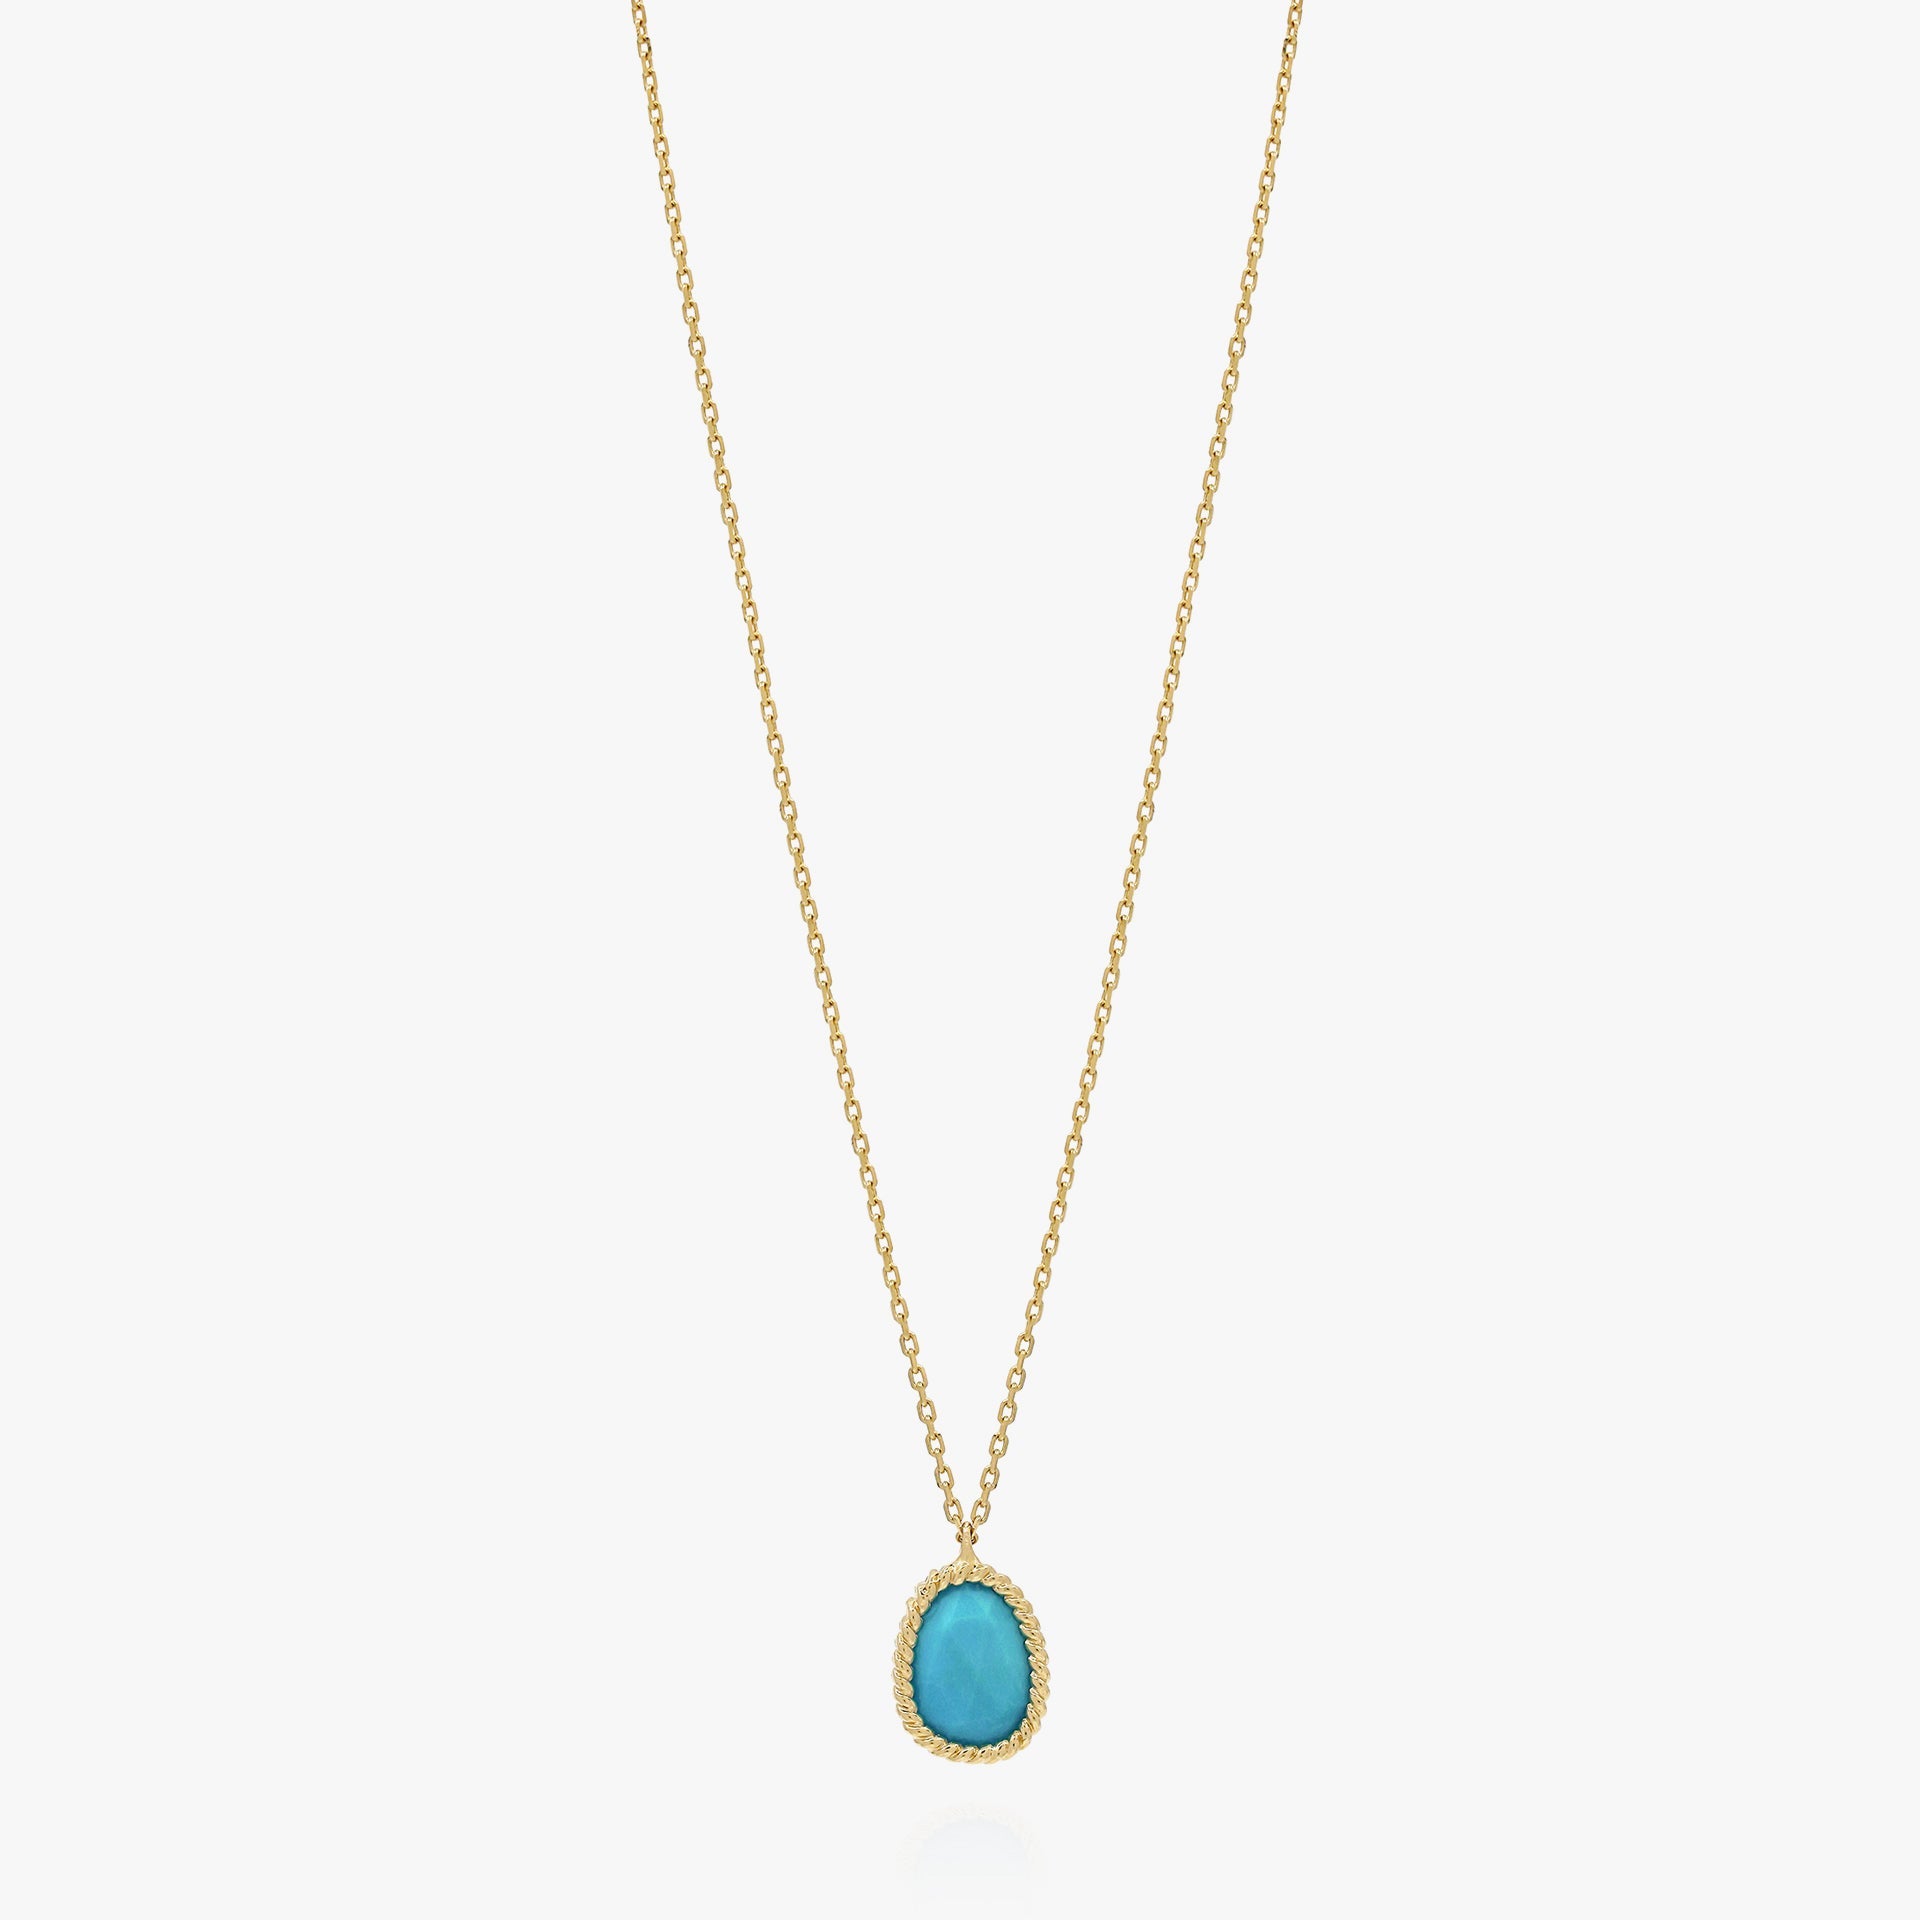 Nina Mariner Necklace In 18 Karat Yellow Gold With Large Turquoise Stone